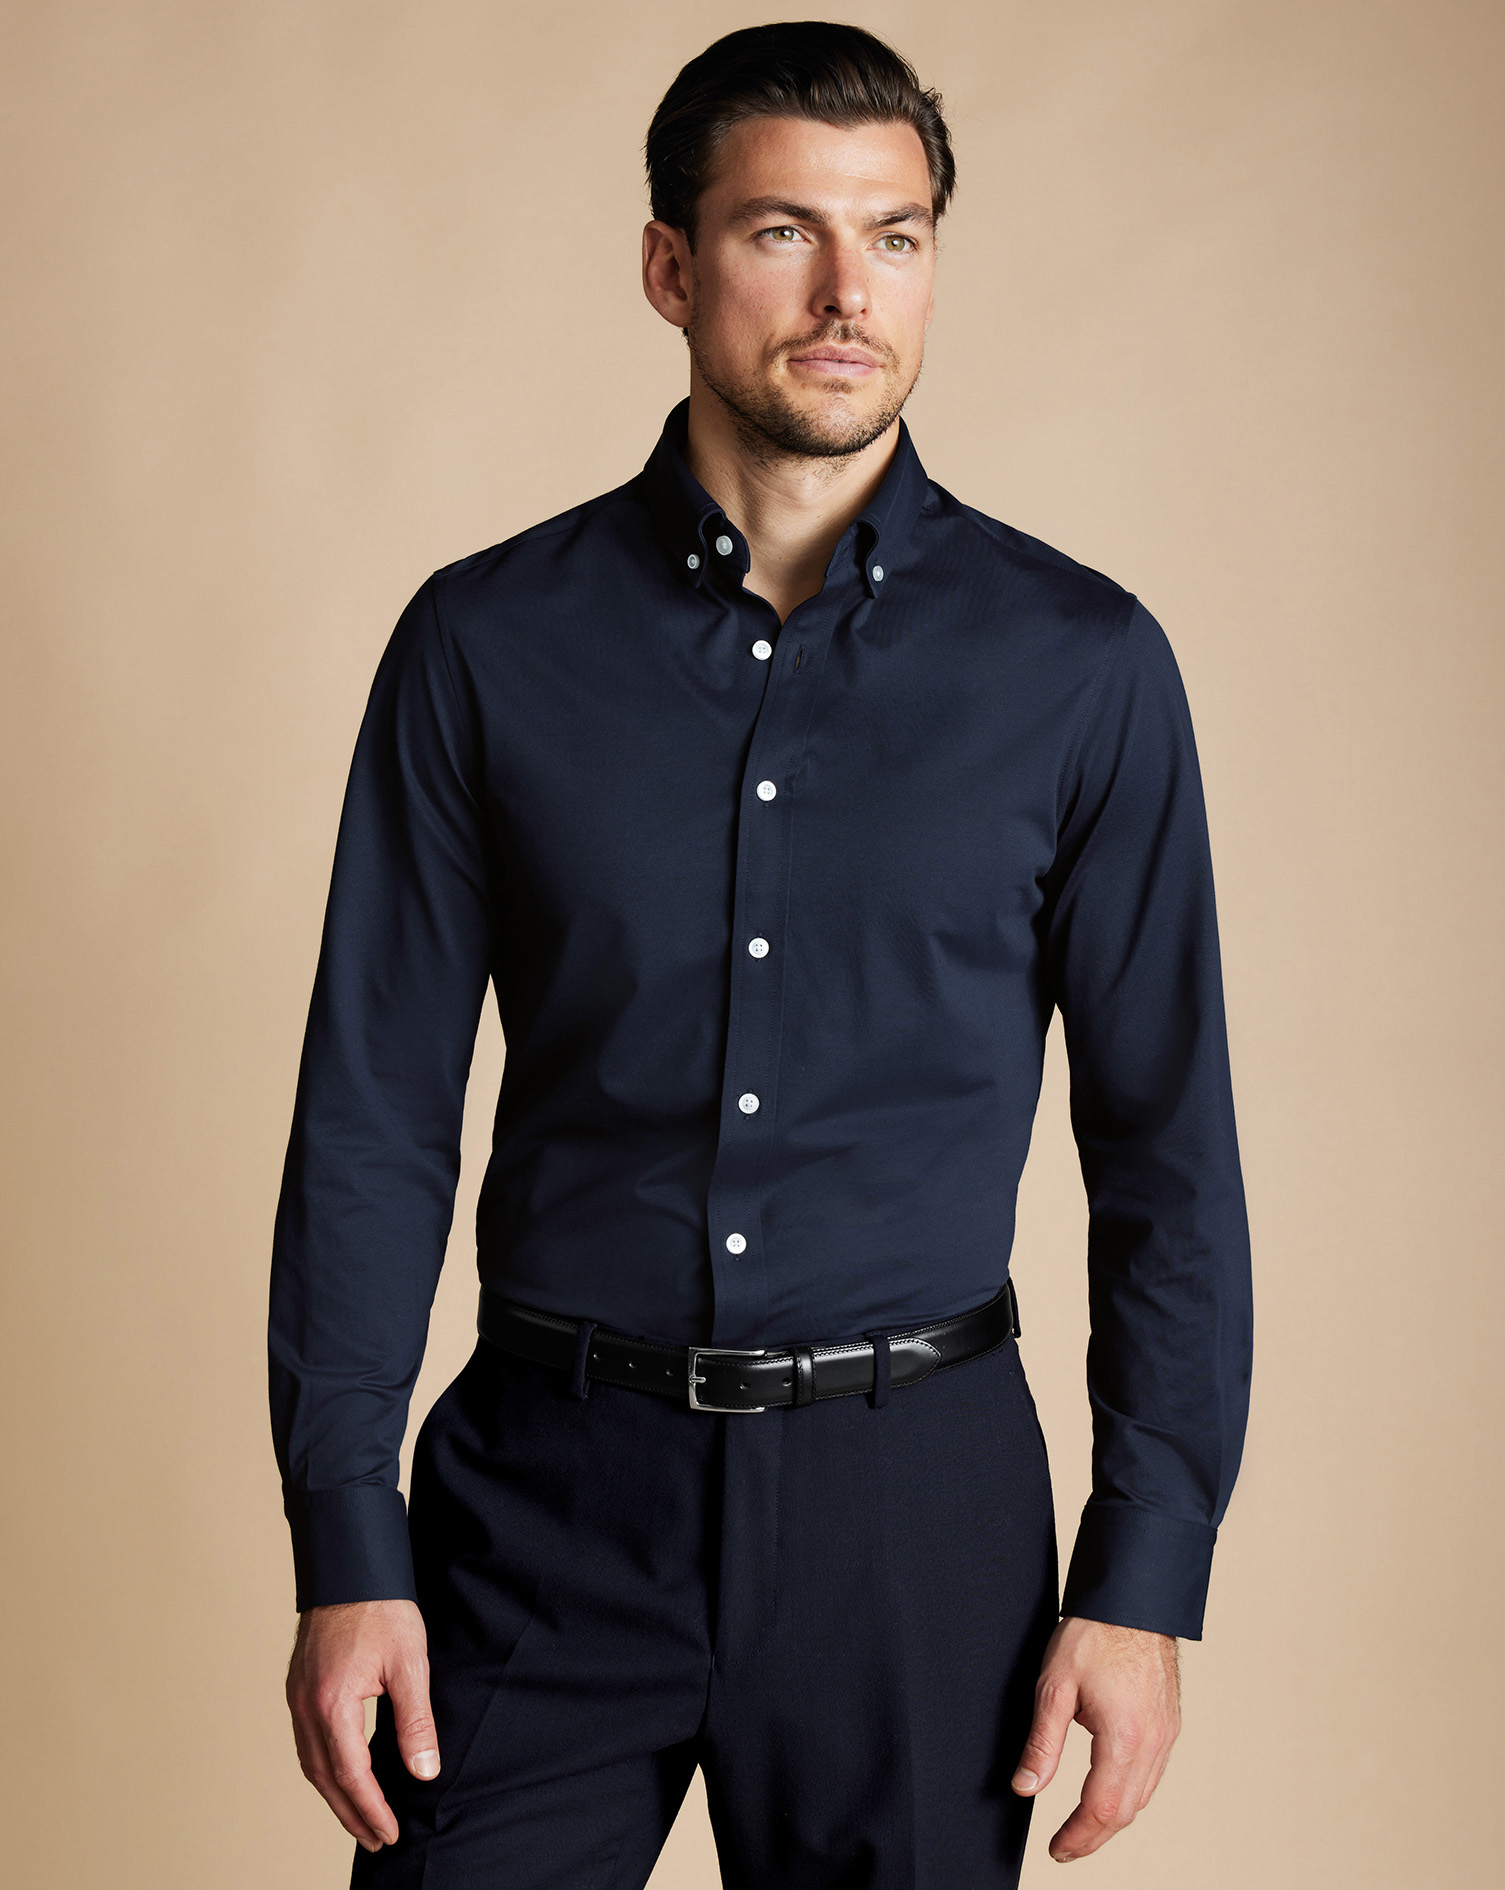 Men's Charles Tyrwhitt 4-Way Stretch Jersey Casual Shirt - Navy Blue Size Medium Cotton
